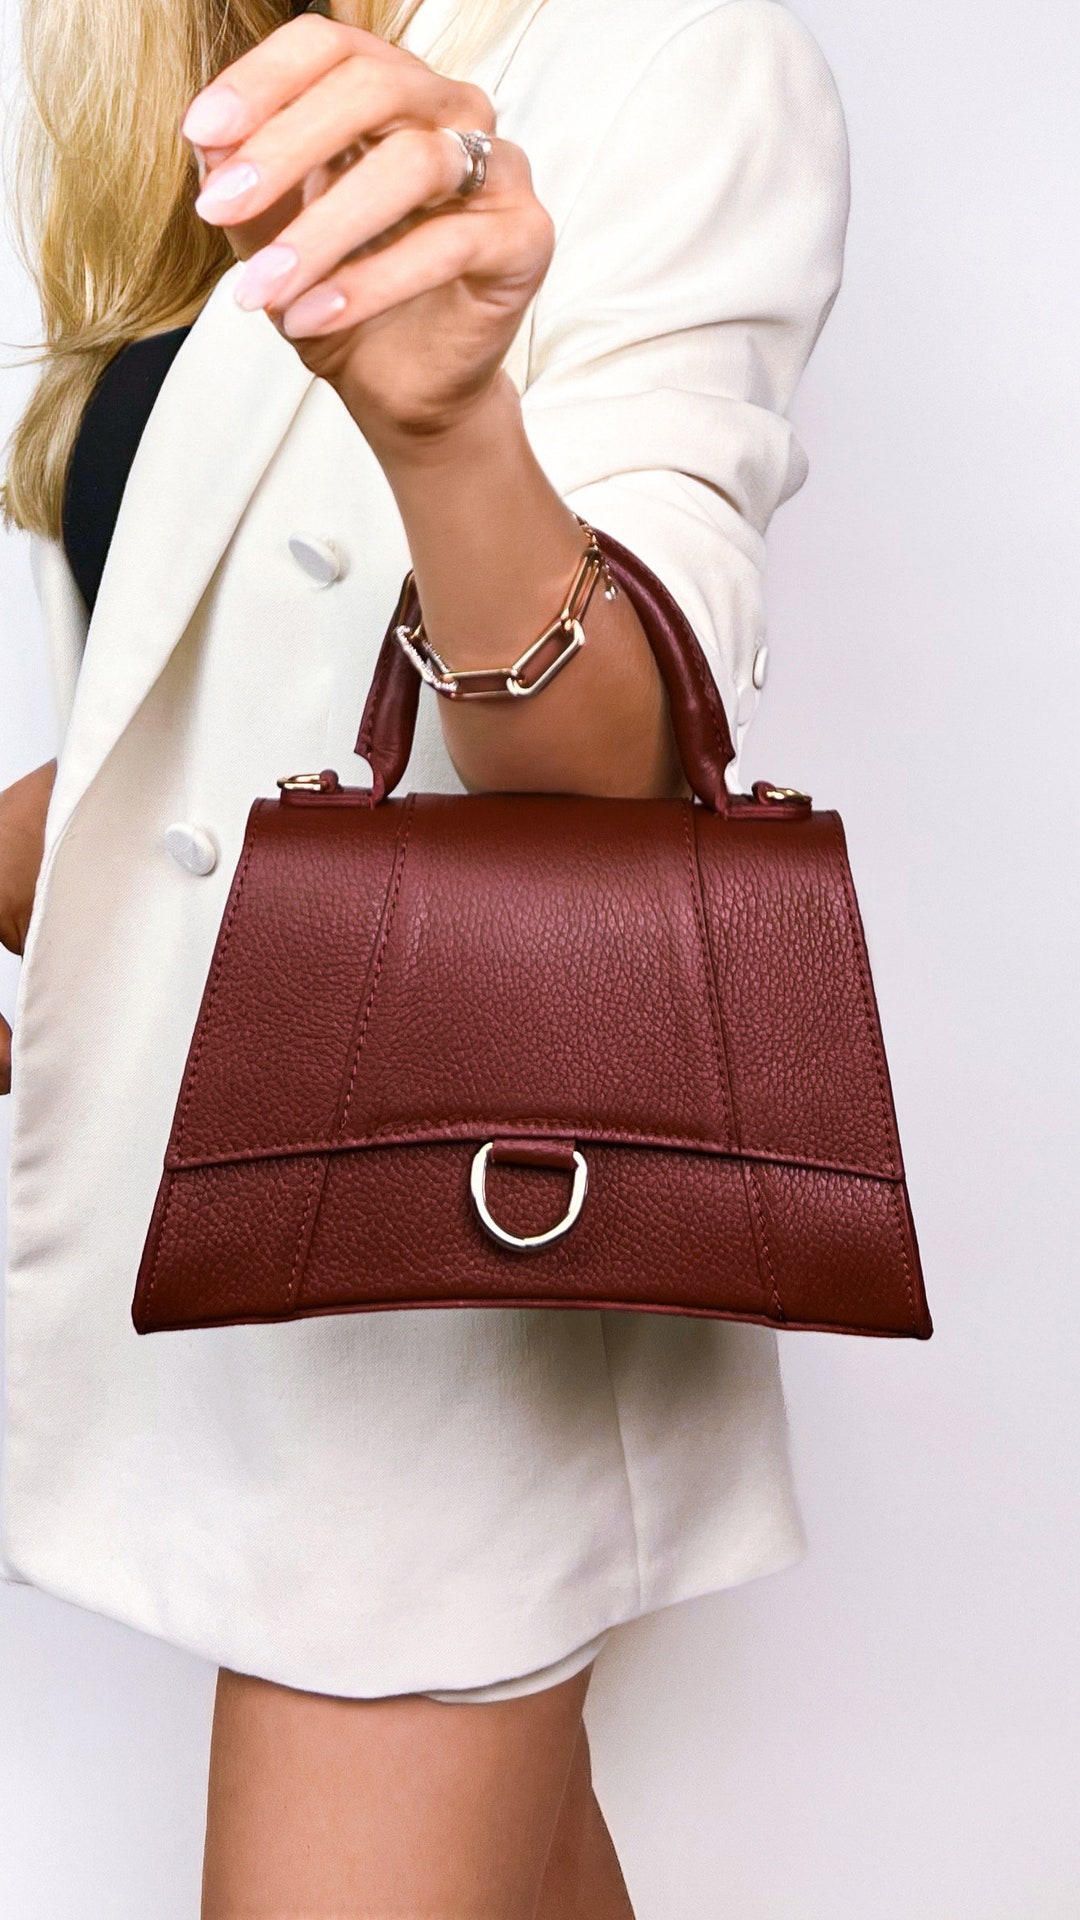 Italian 100% Leather Handbag in Gift Box, Genuine Leather Bag, Made in ...